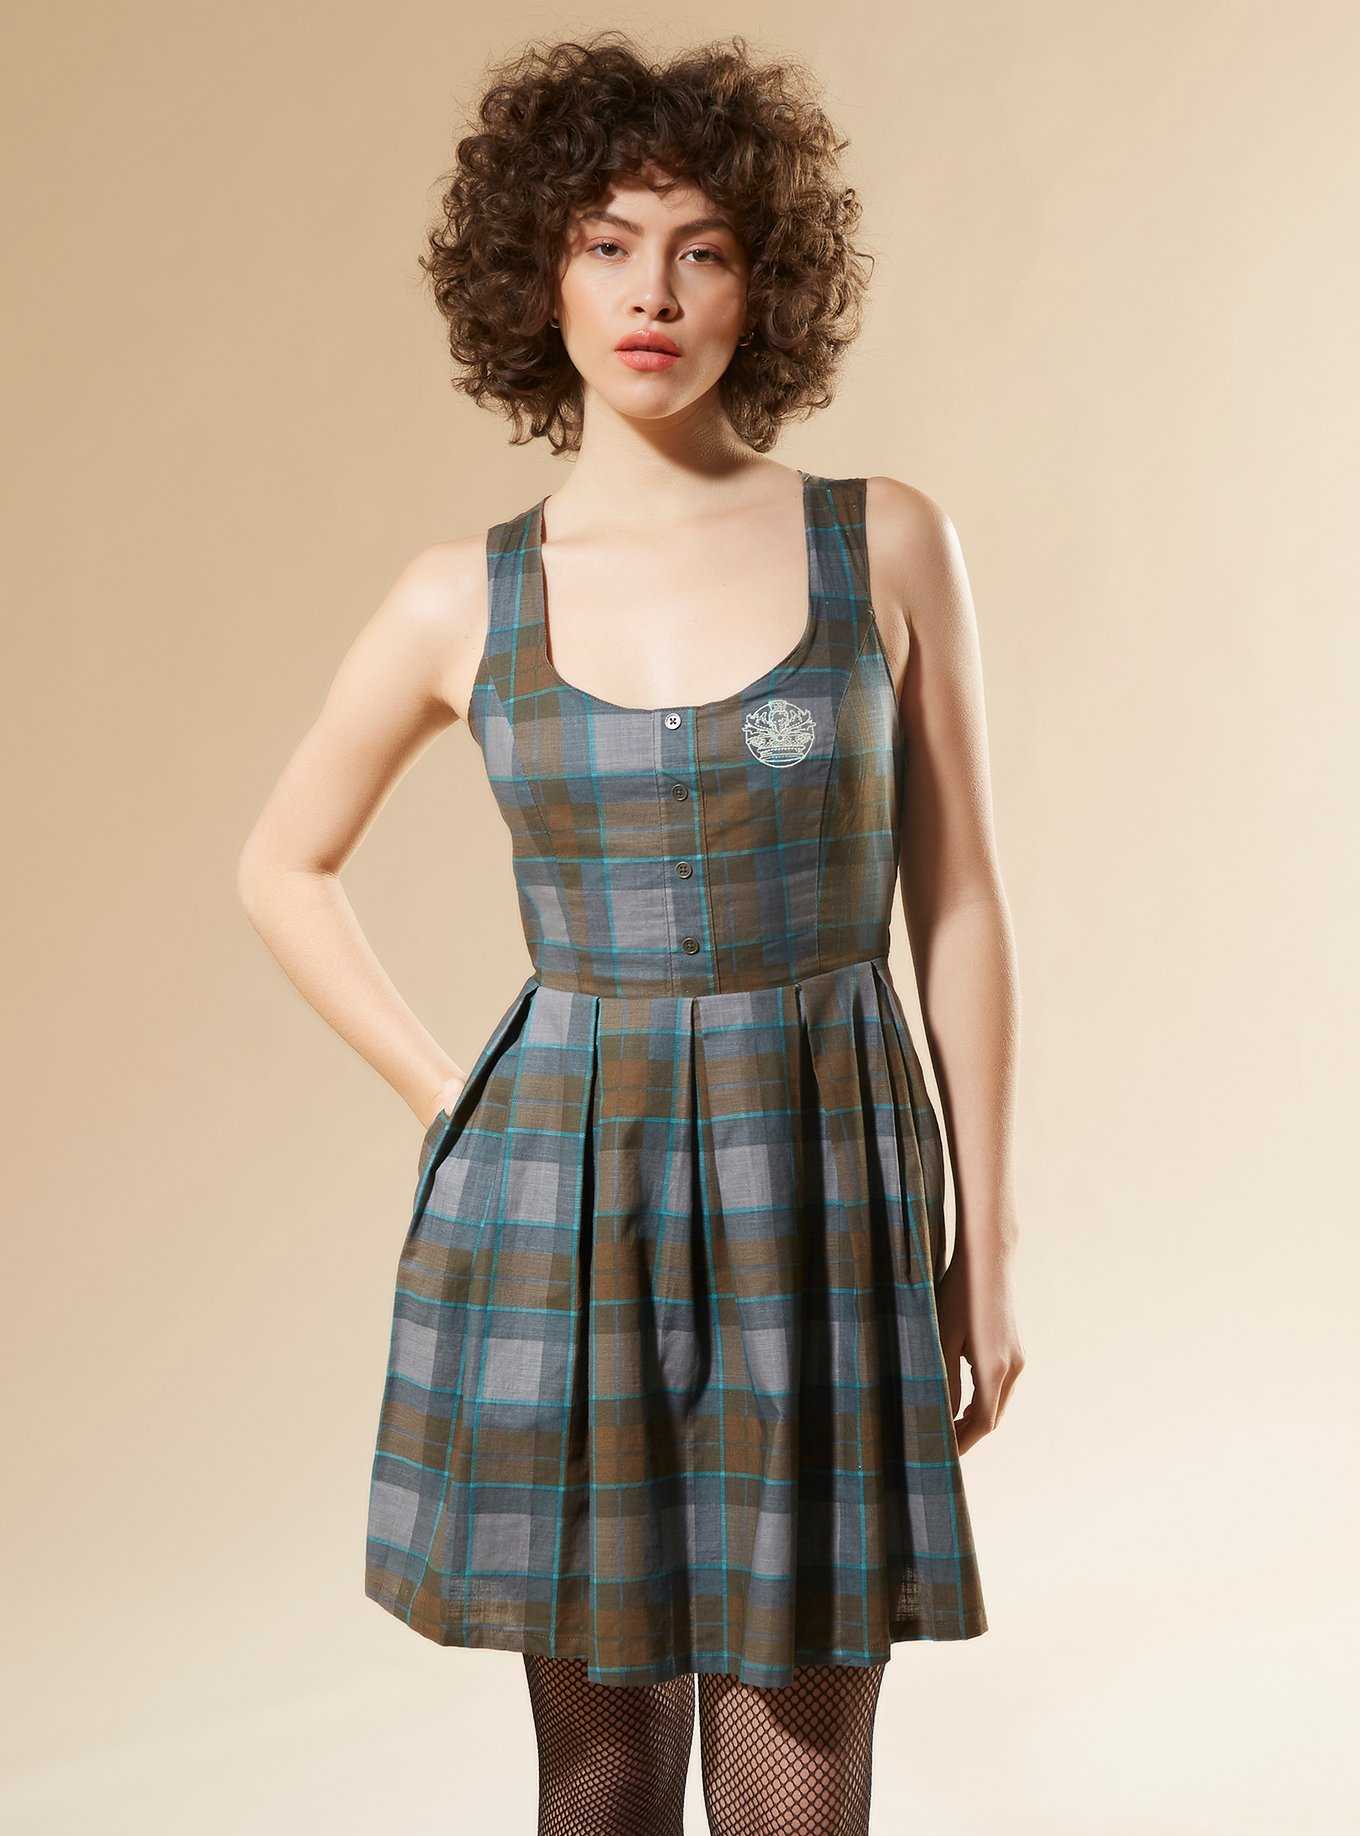 Outlander Lace-Up Tartan Plaid Dress, , hi-res